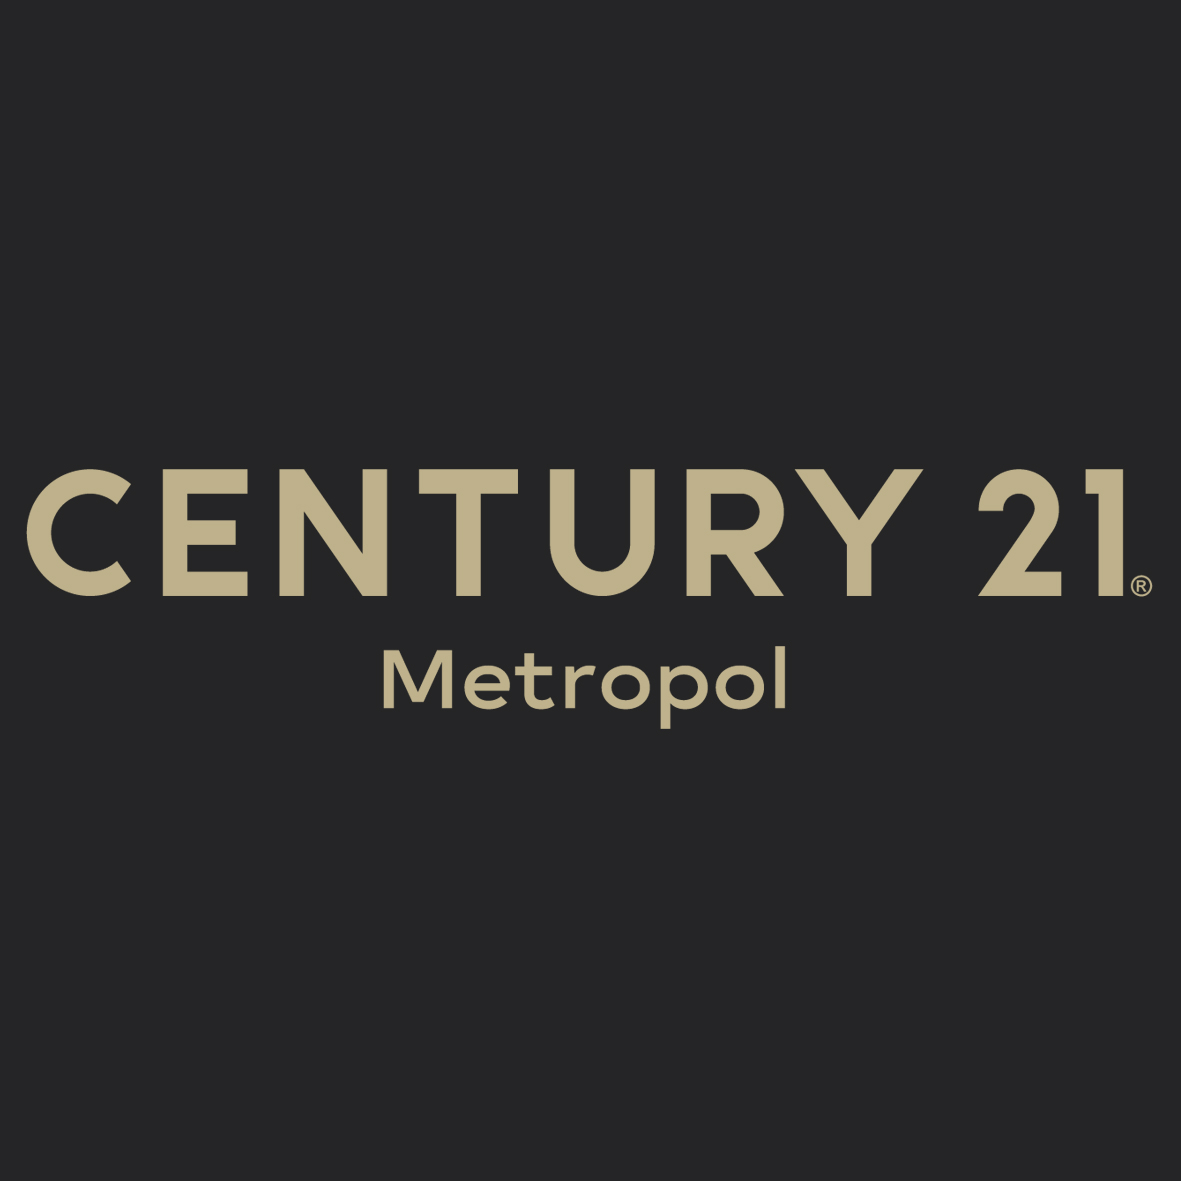 CENTURY 21 Metropol